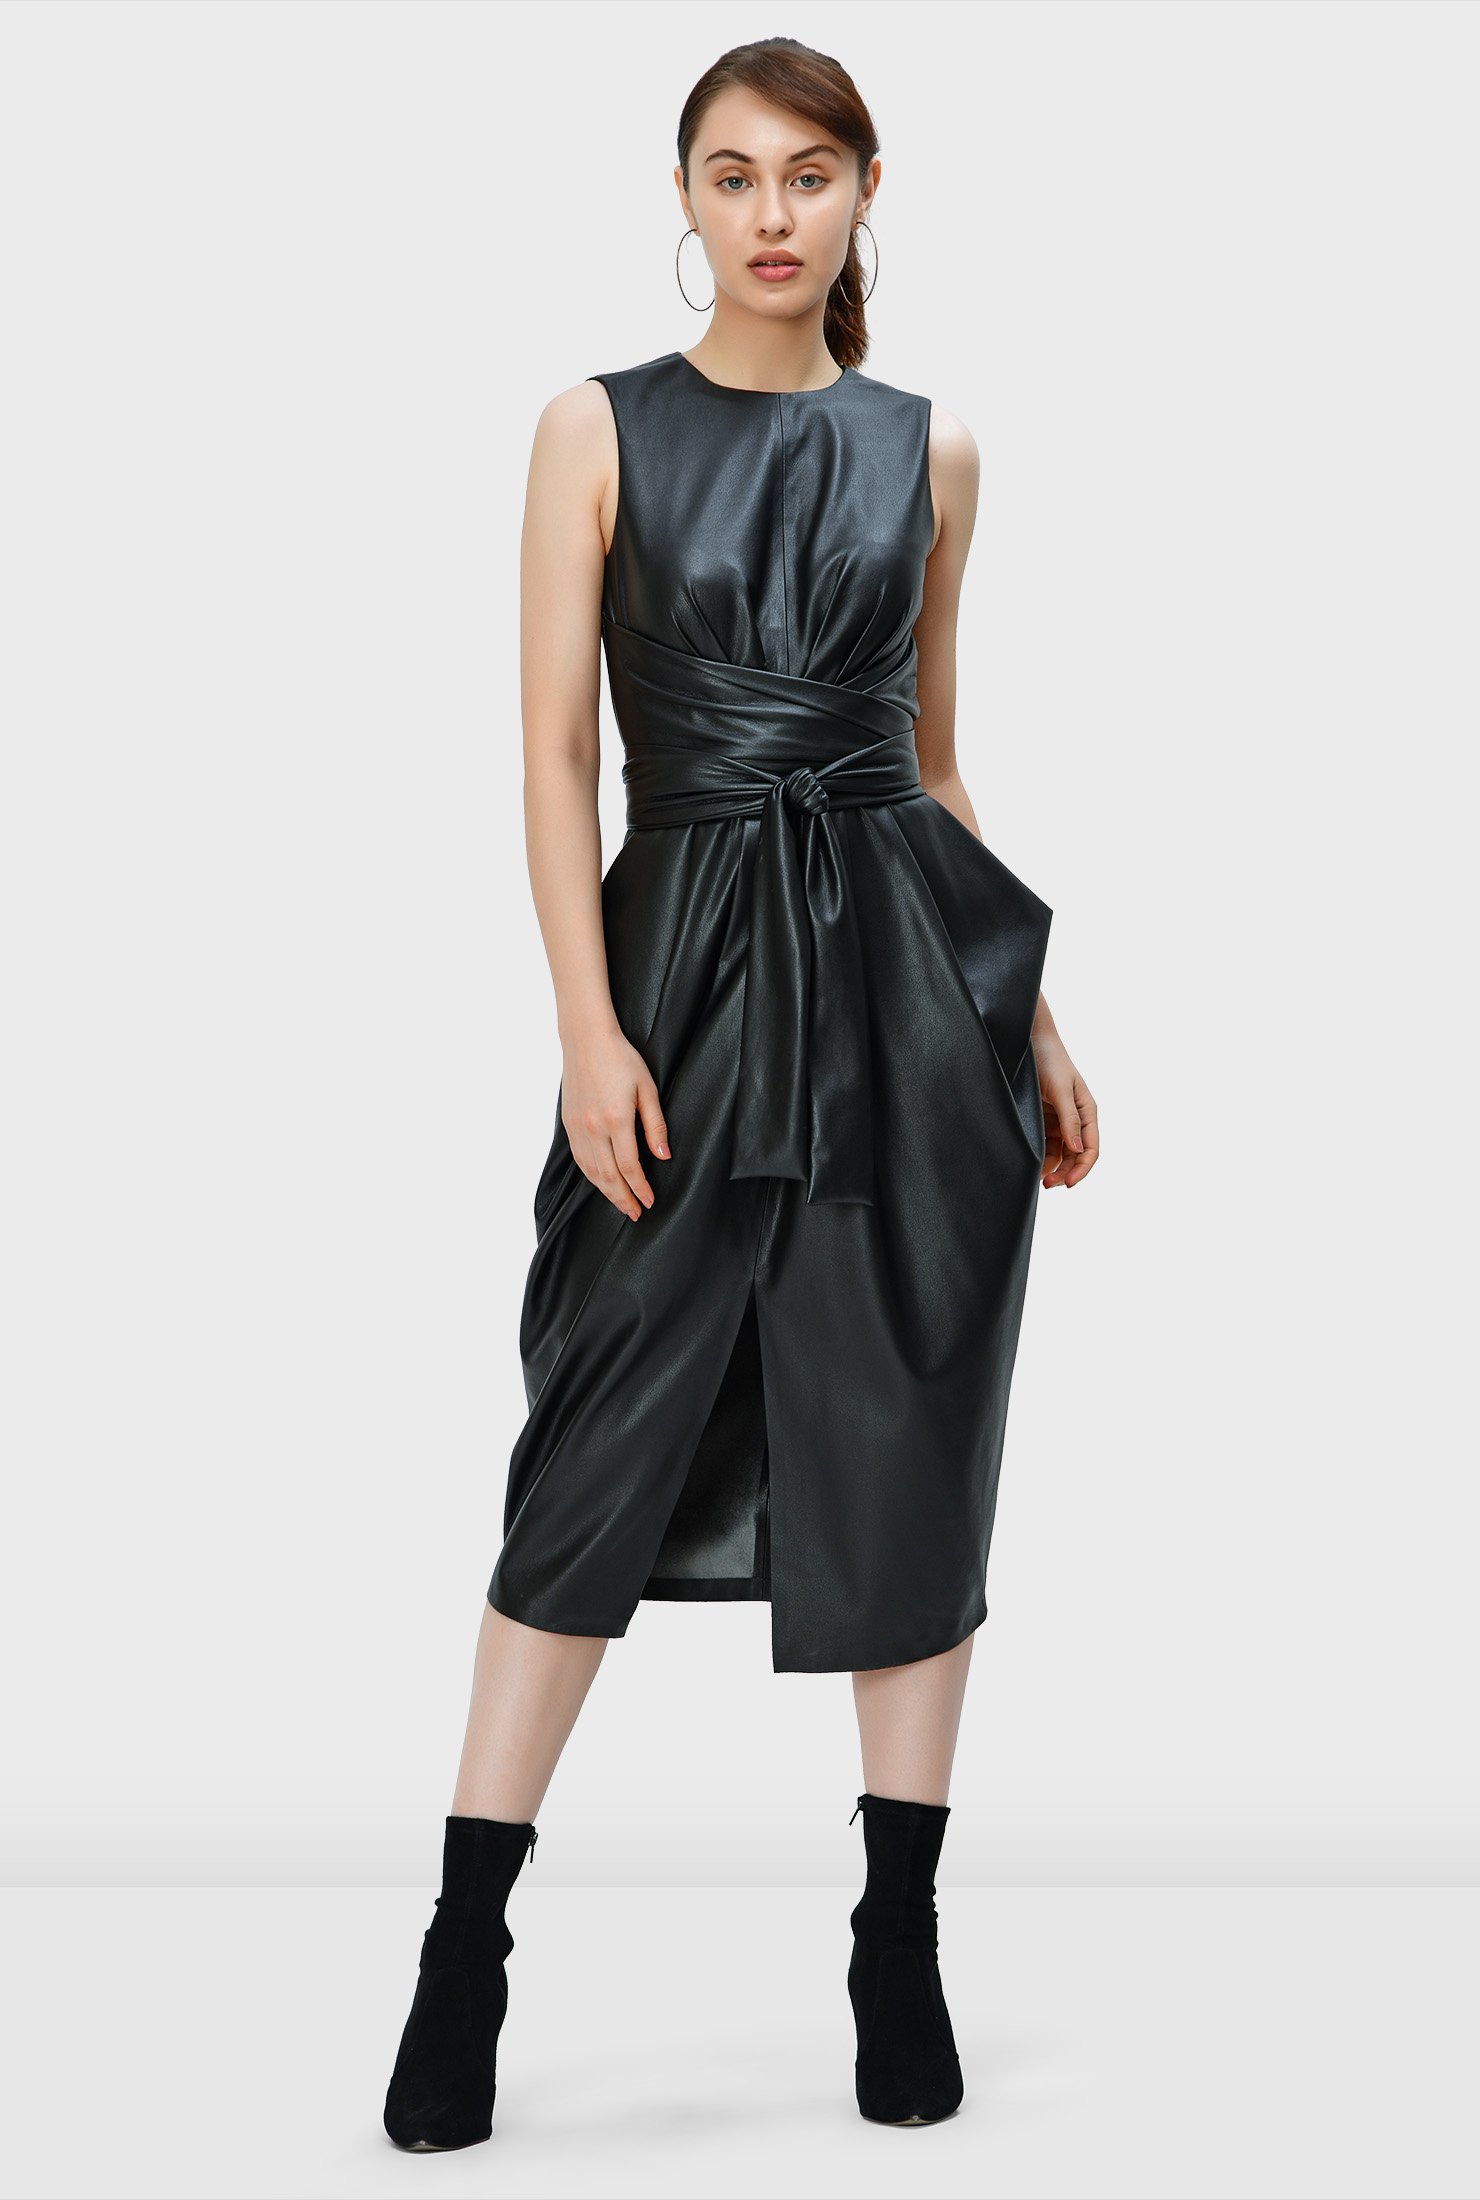 Shop Cowl pleat faux leather obi belt dress | eShakti